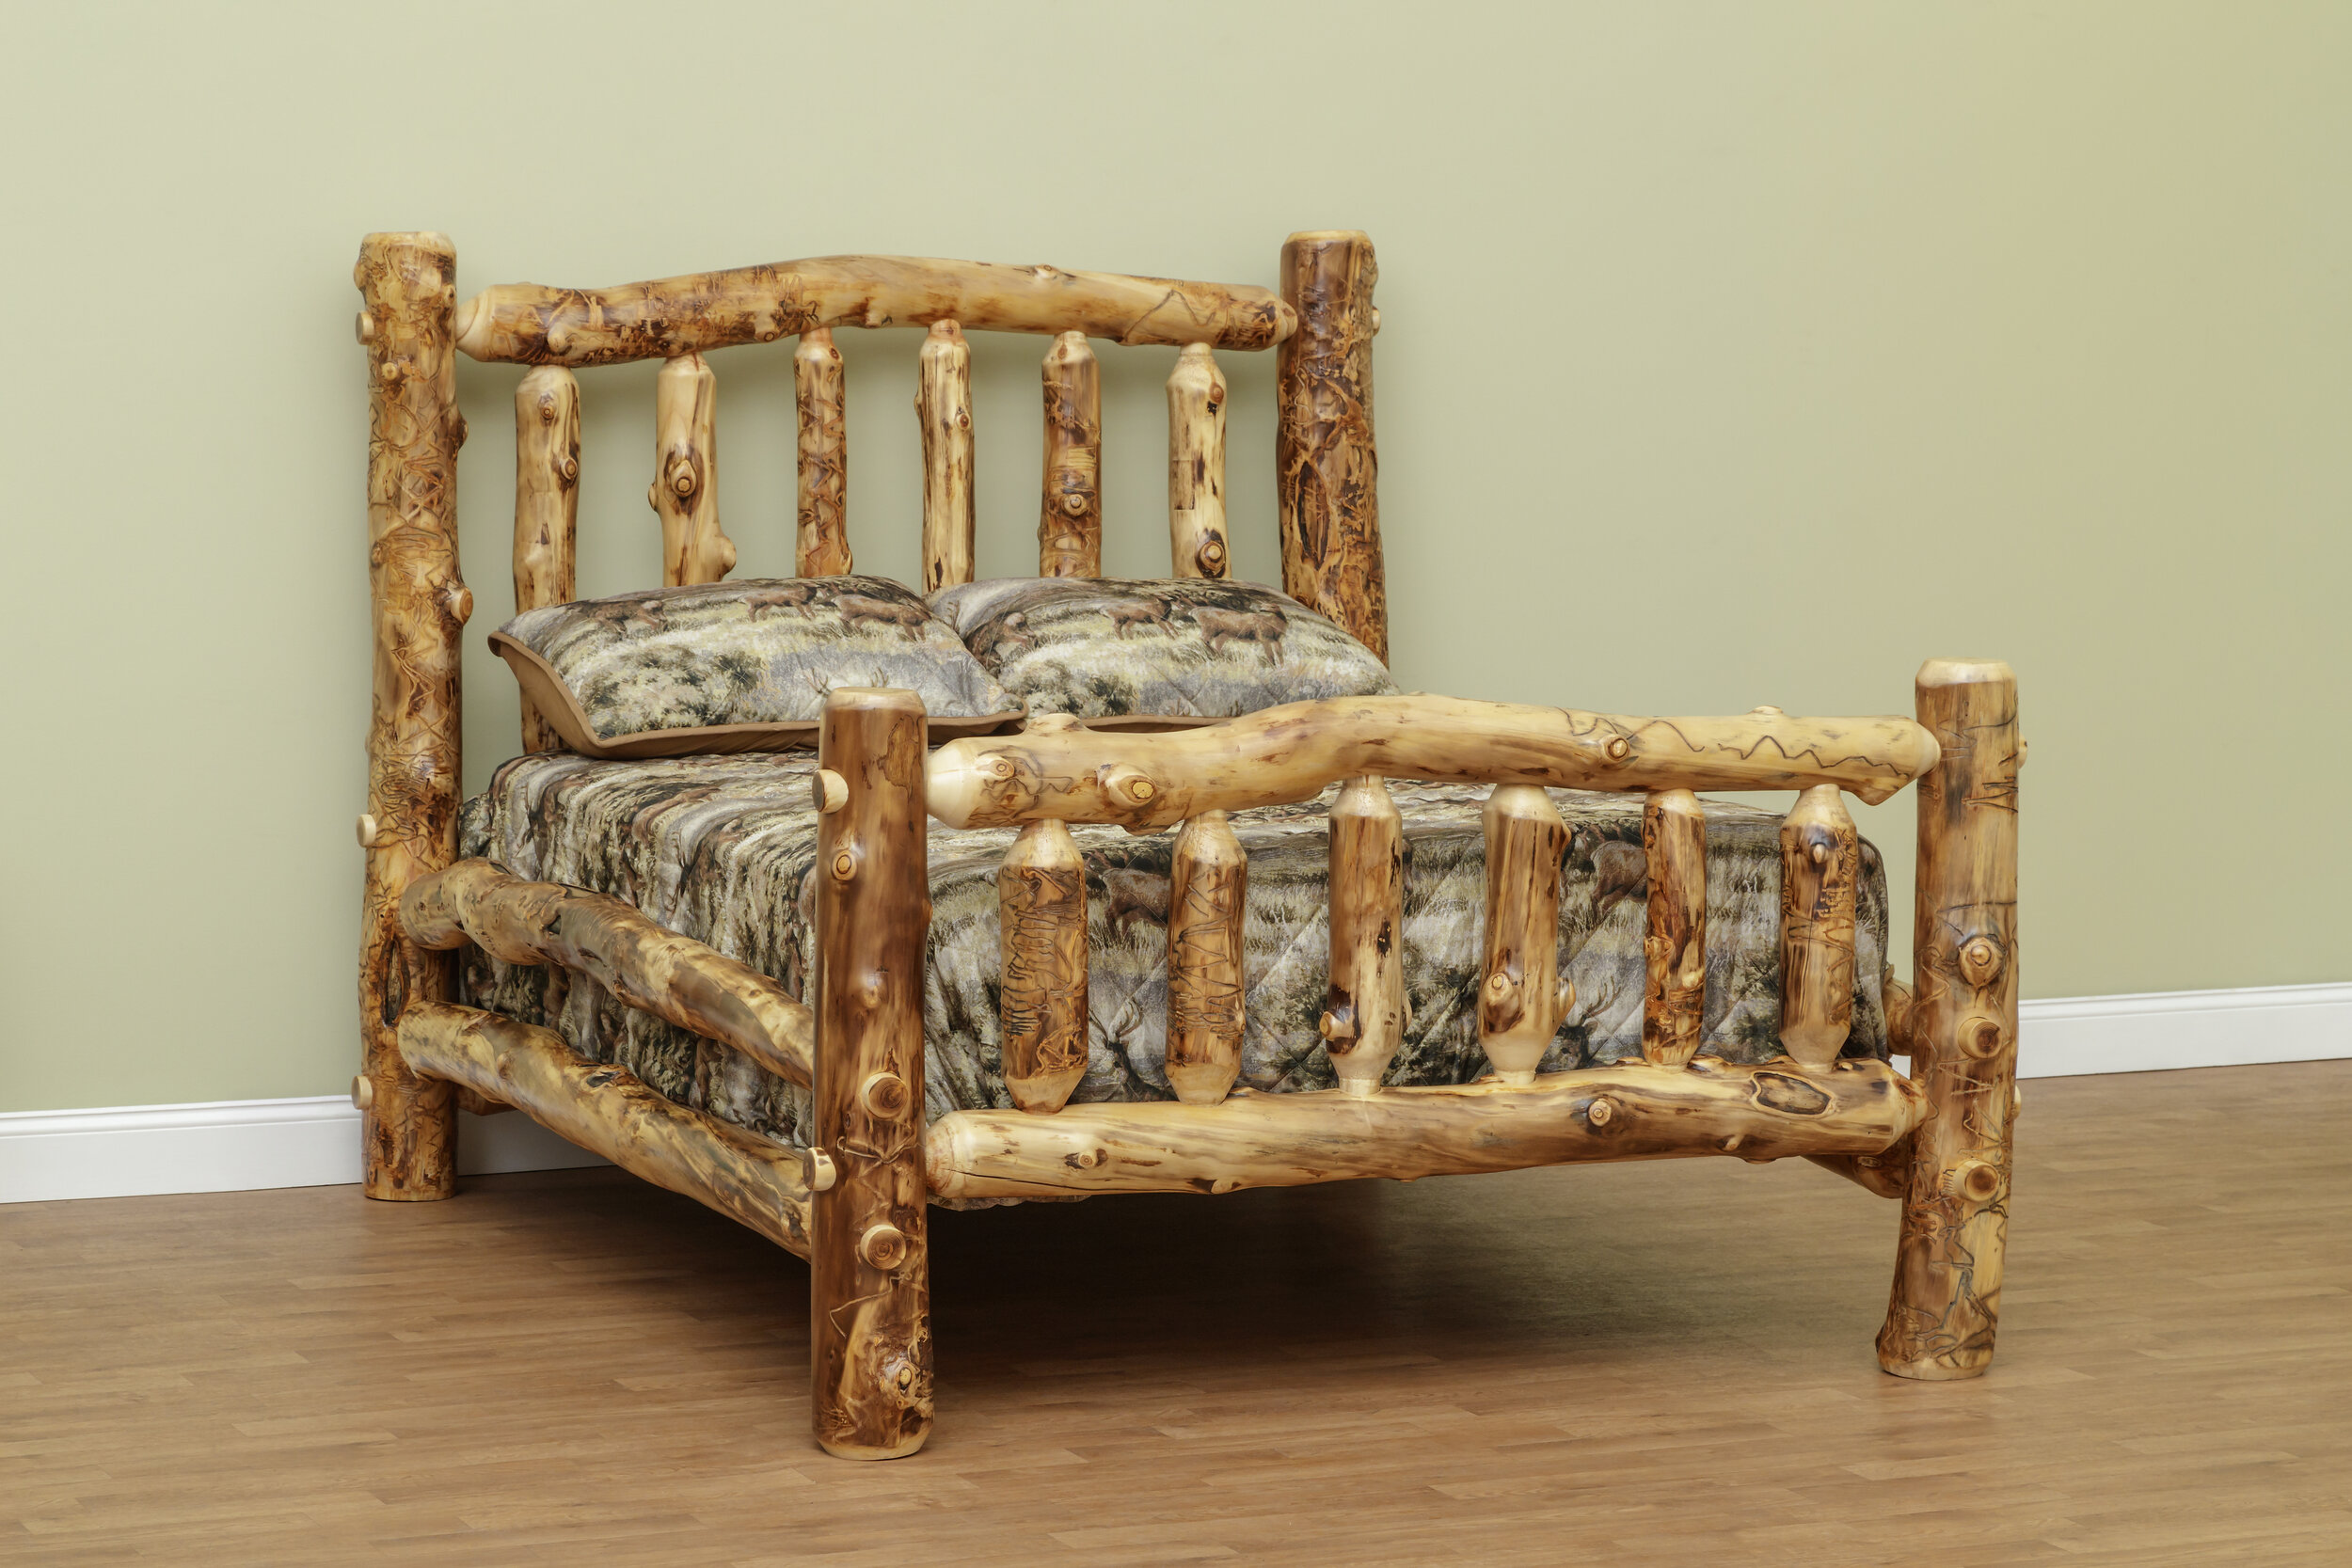 aspen log bedroom furniture colorado